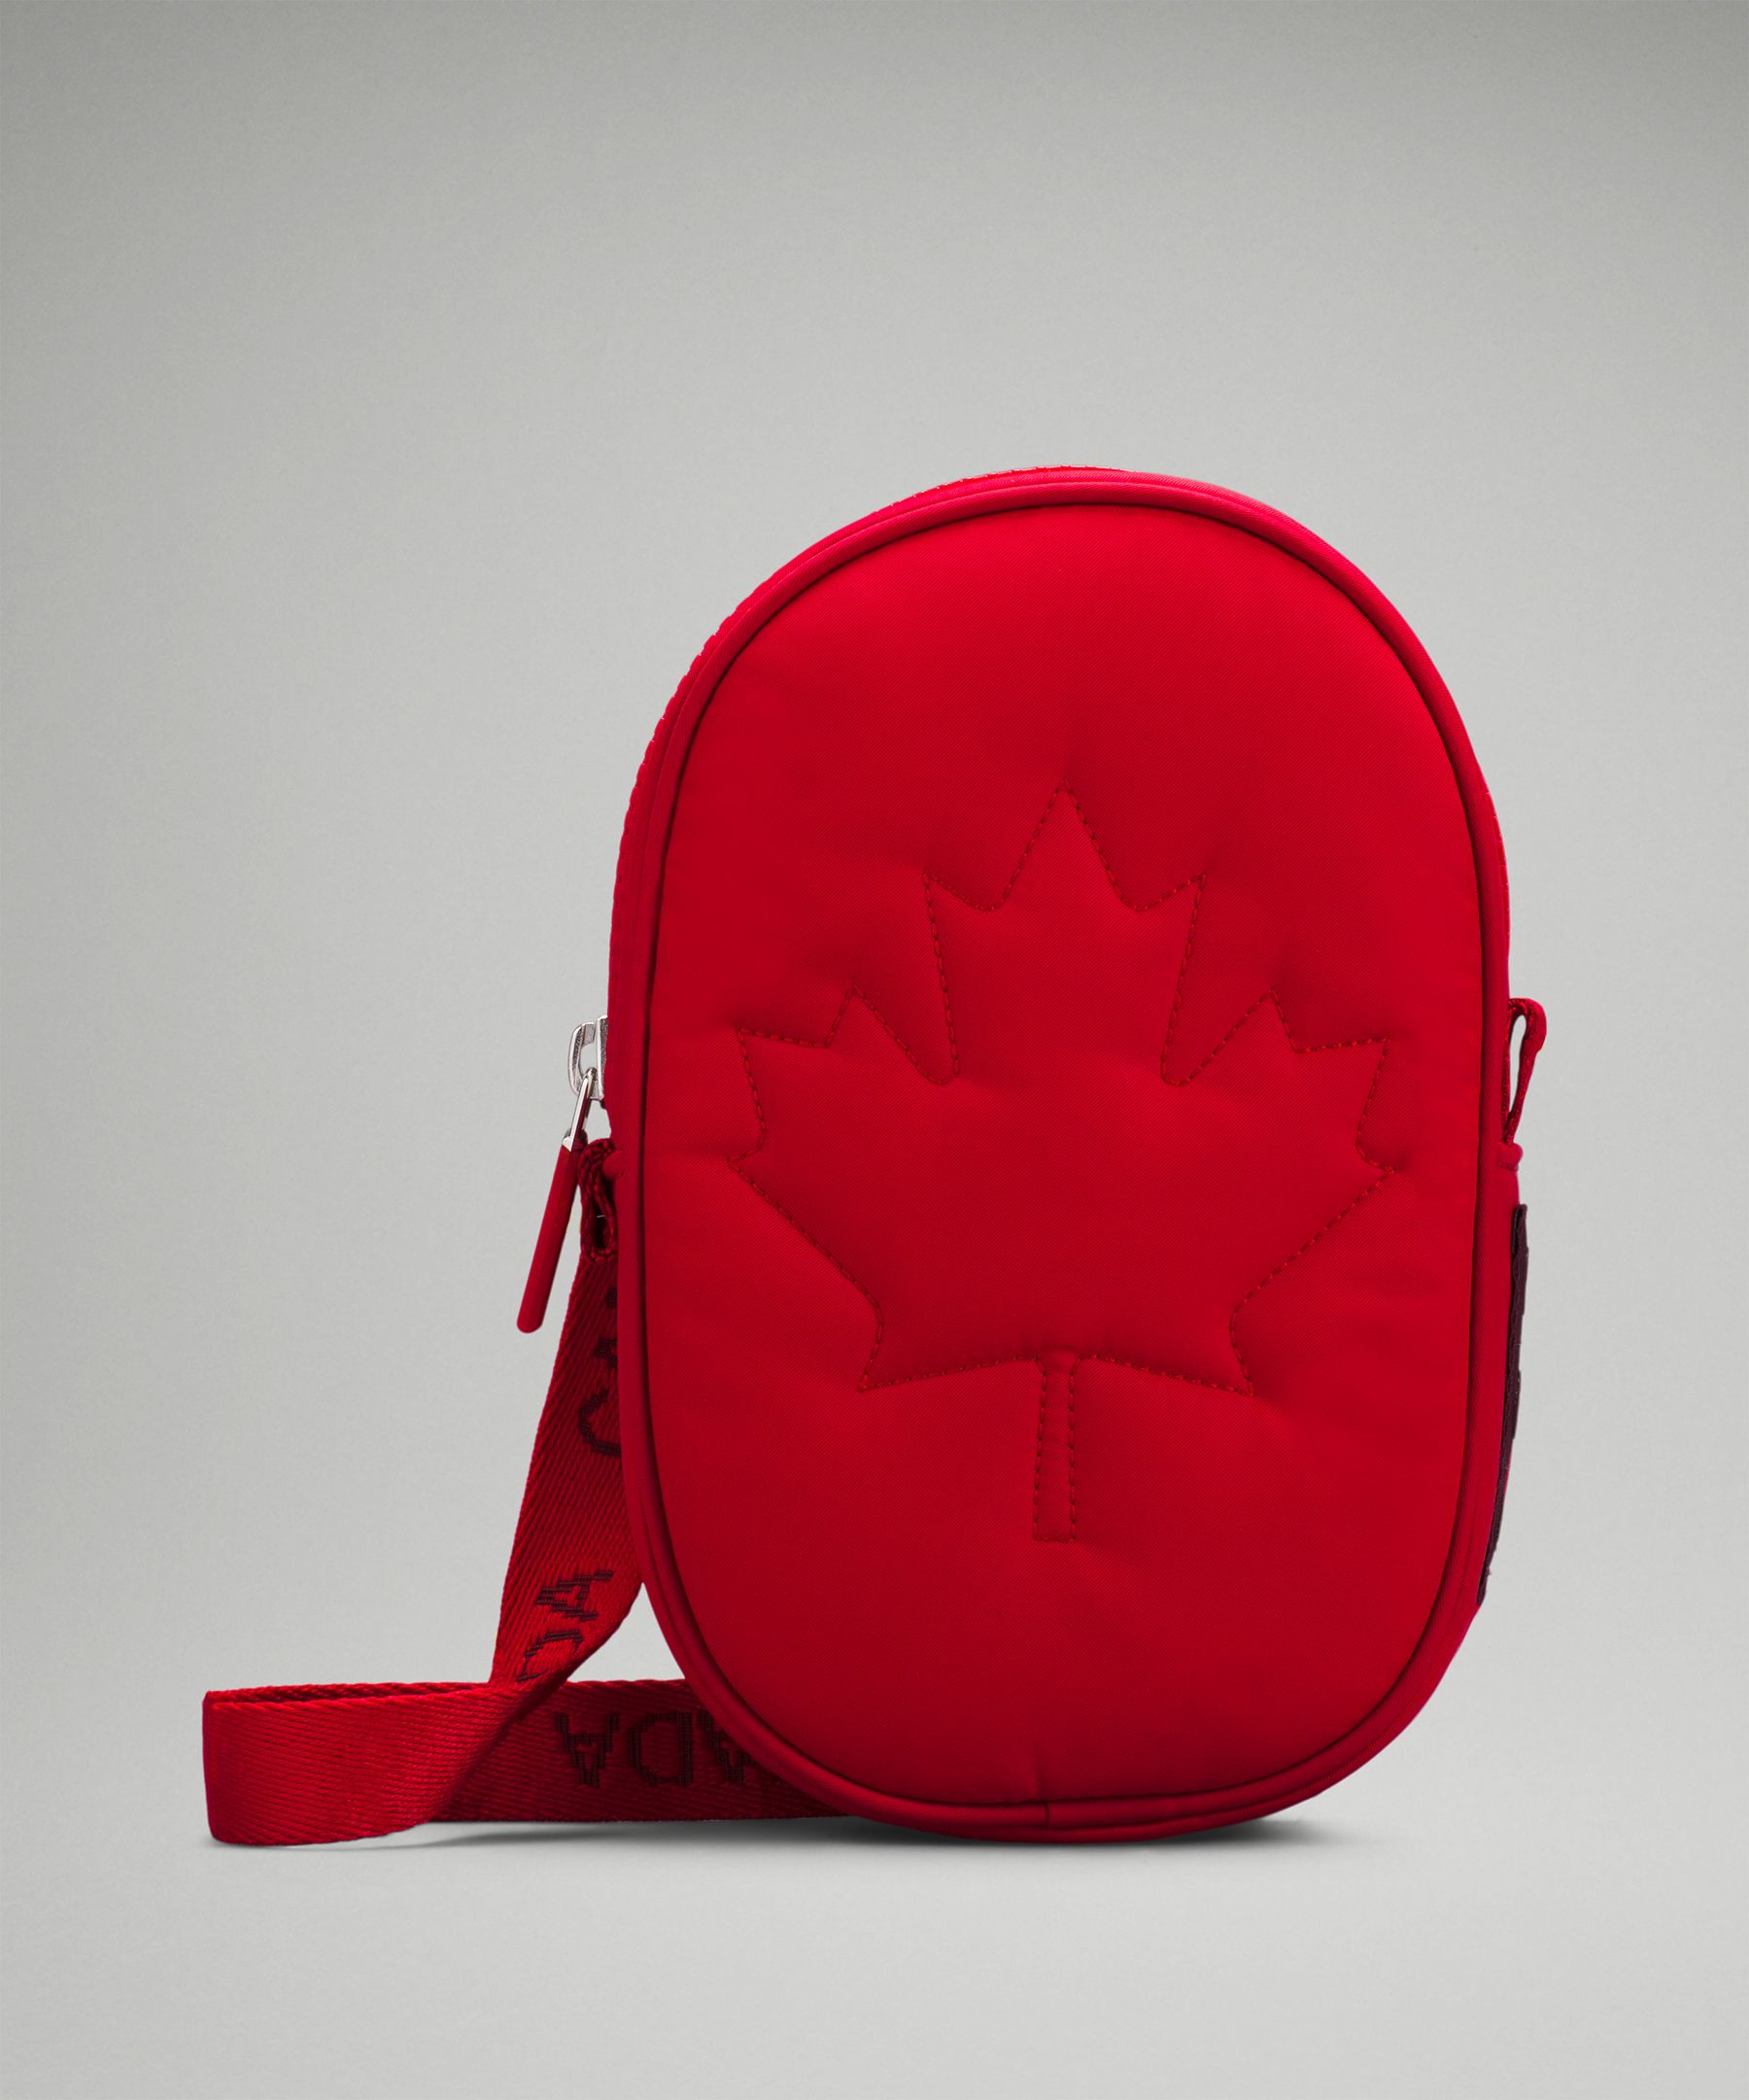 Team Canada Future Legacy Mini Belt Bag *COC CPC Logo, Unisex Bags,Purses,Wallets